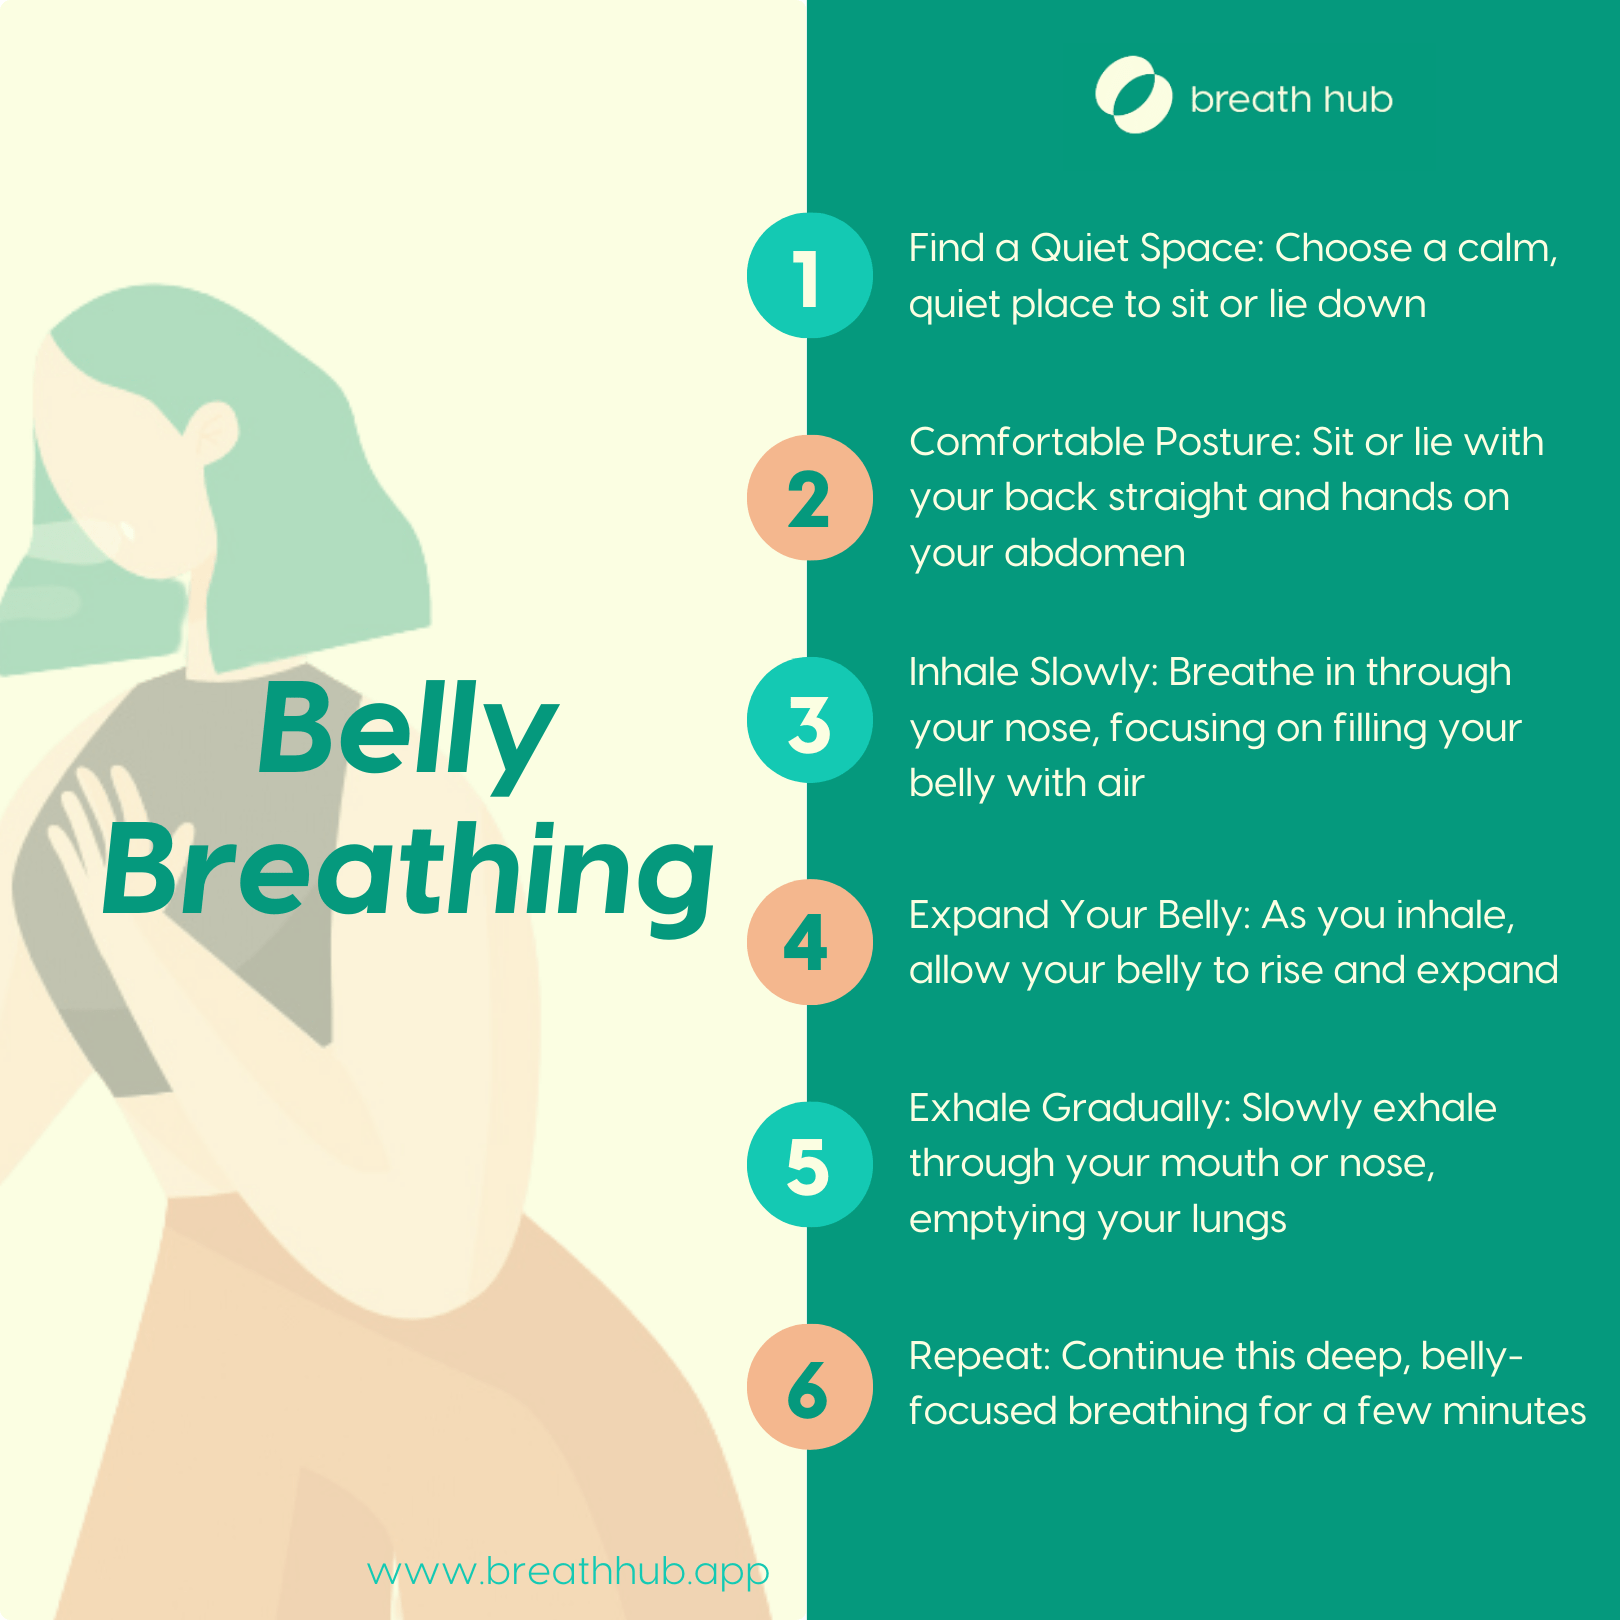 How to Practice Deep Belly Breathing for Digital Detox? - Breath Hub